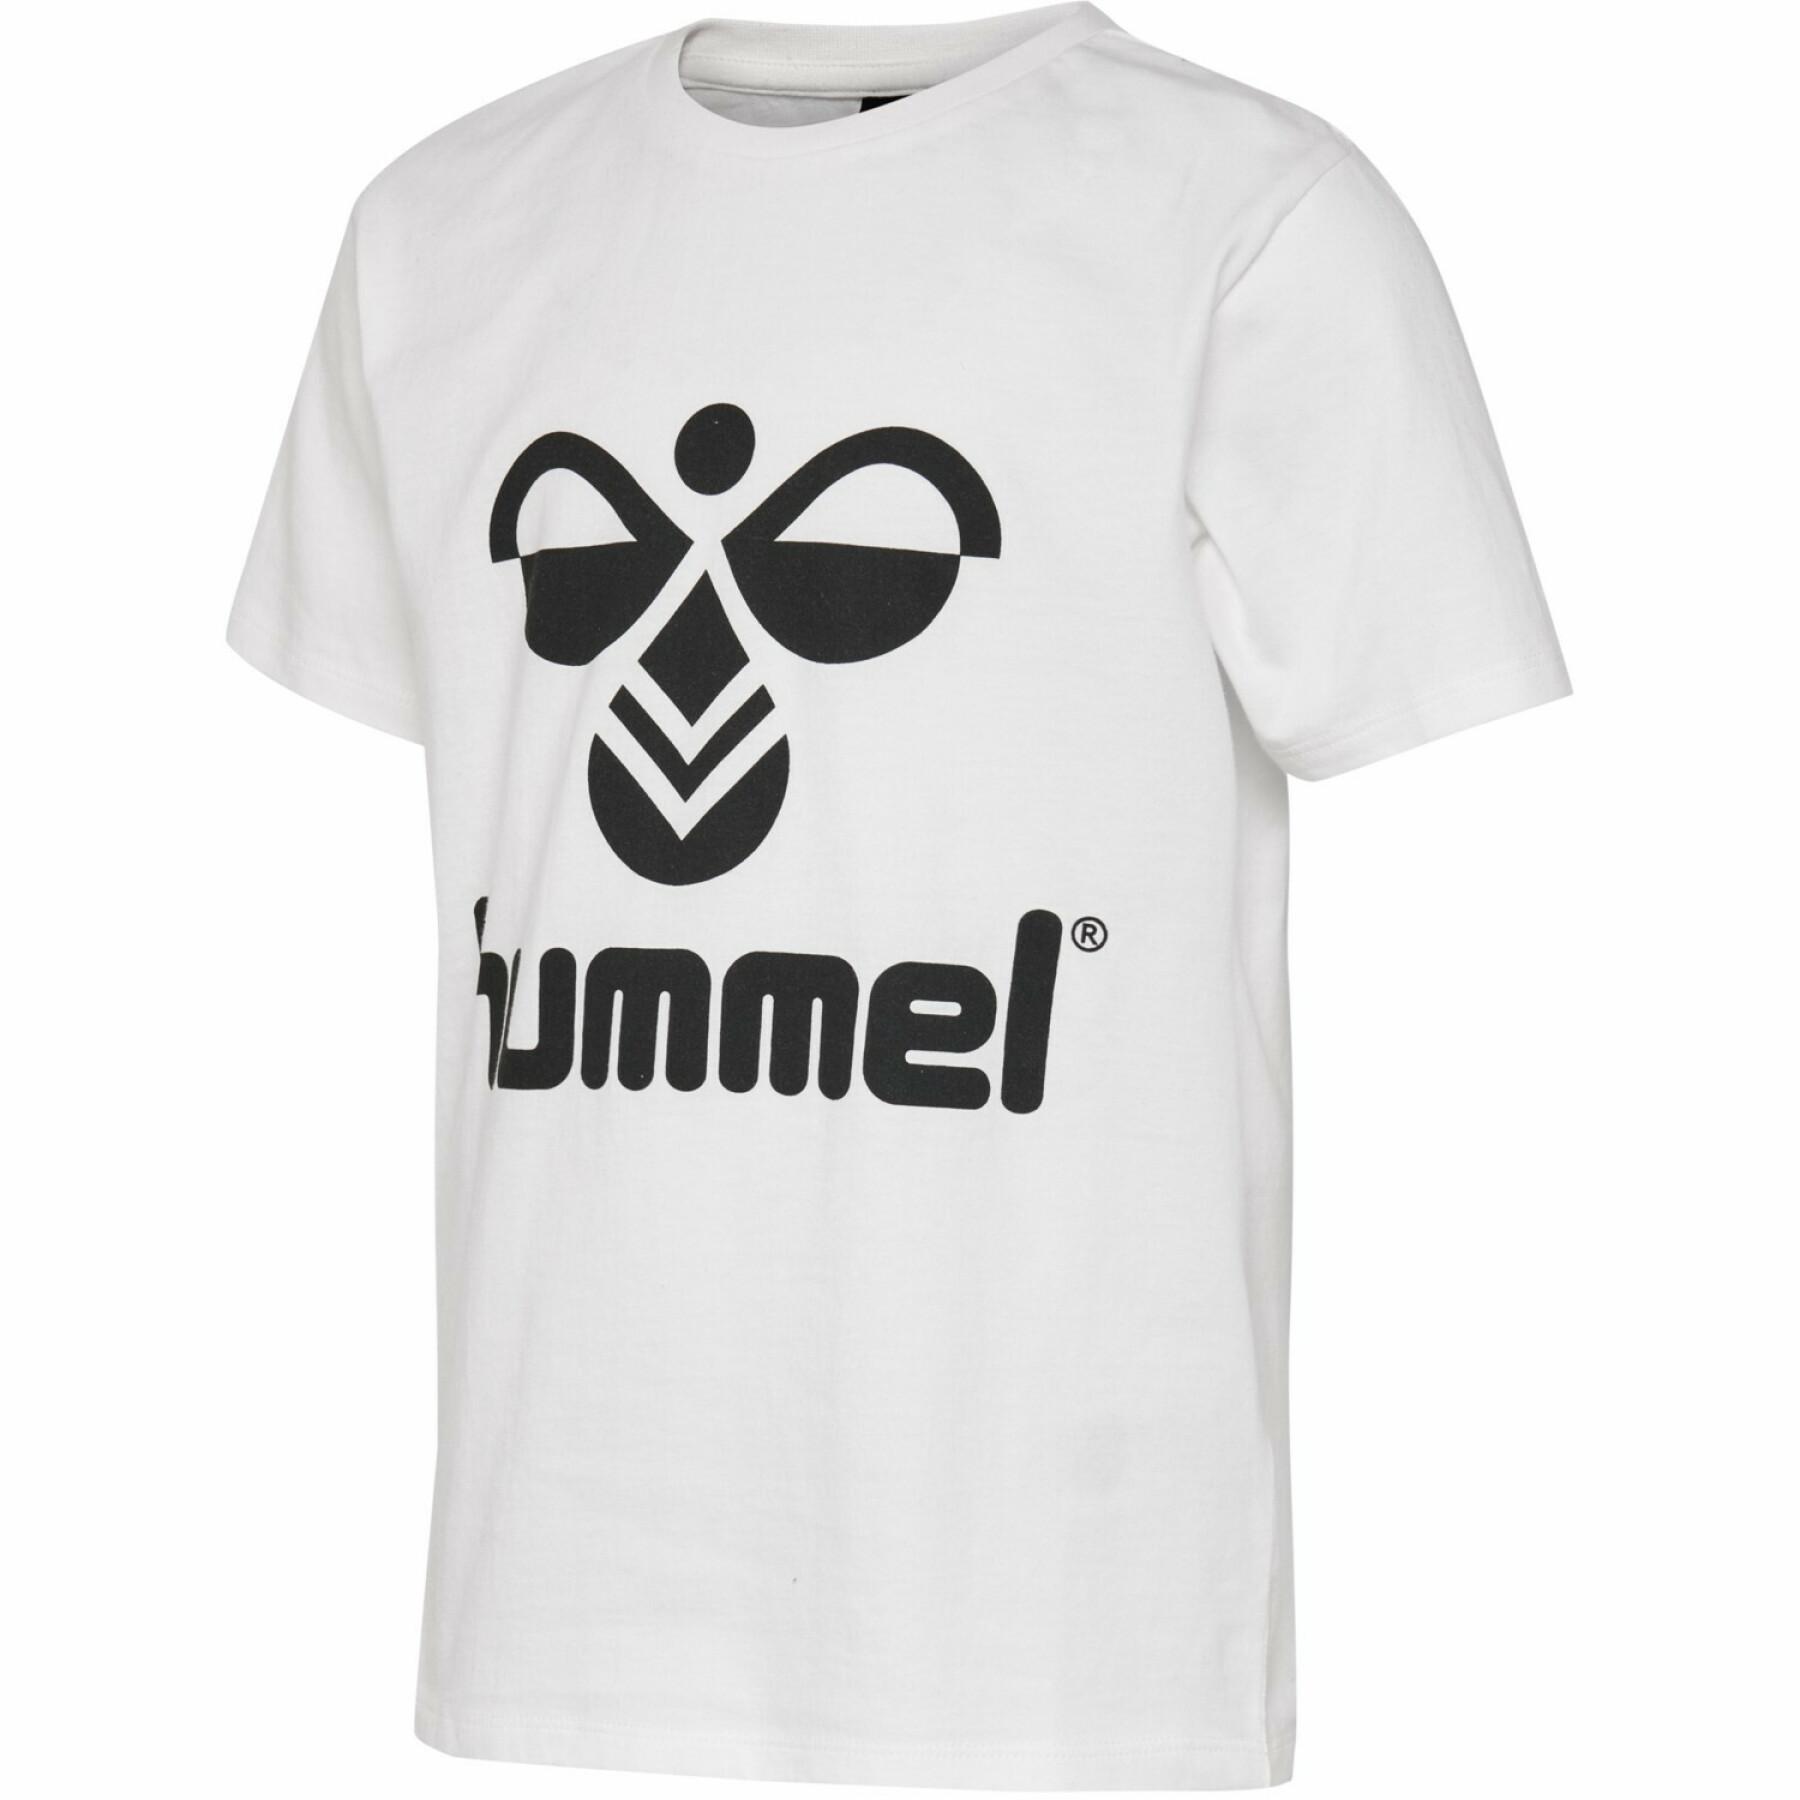 T-shirt criança Hummel hmltres